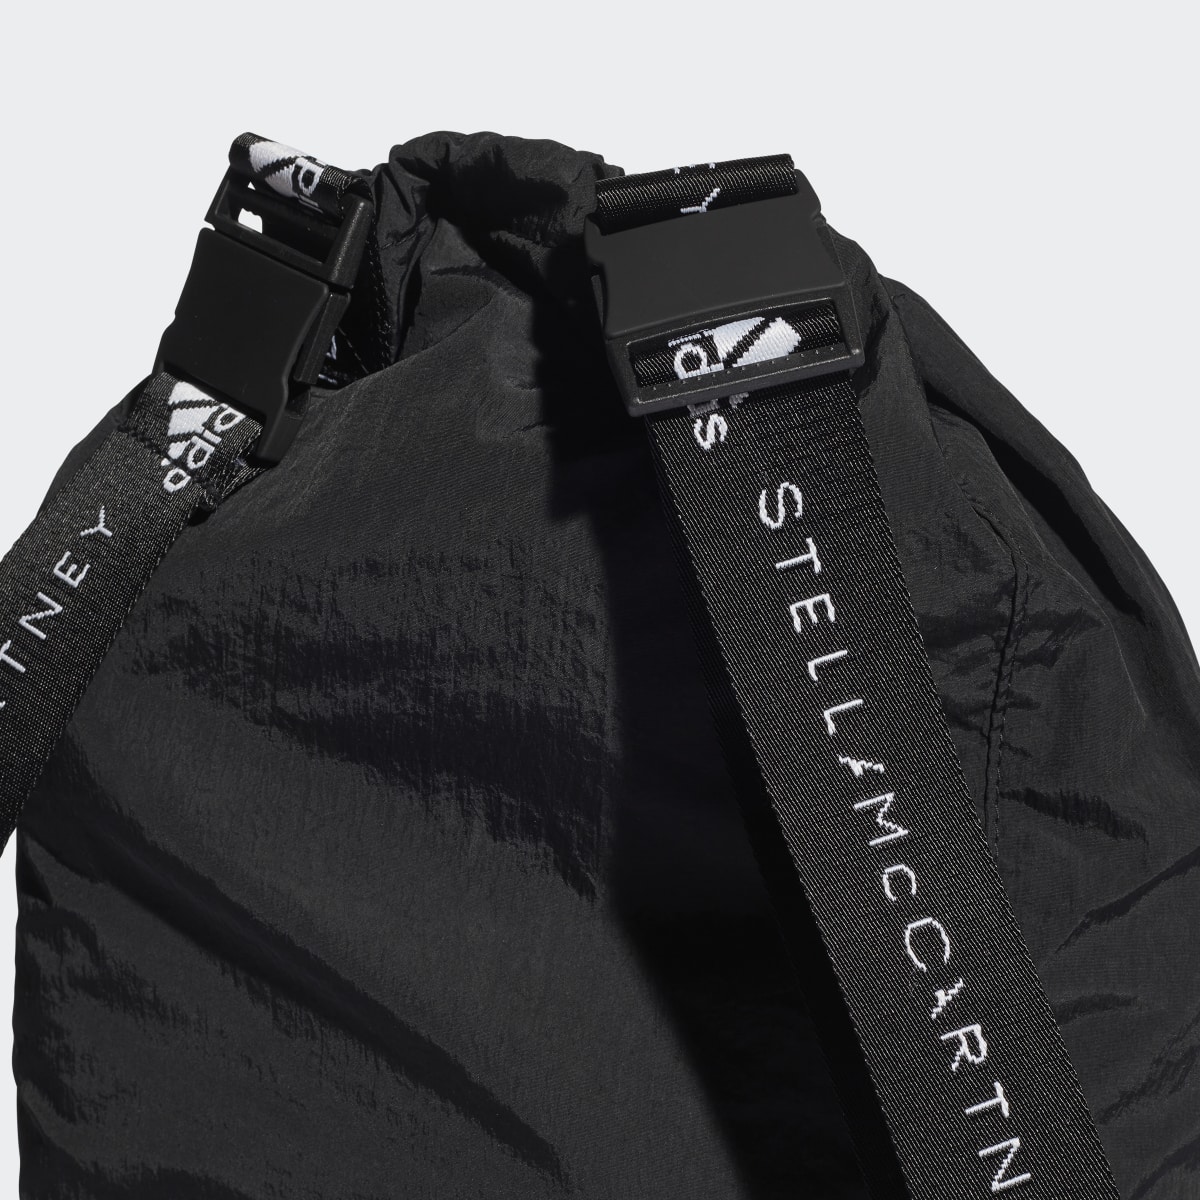 Adidas by Stella McCartney Convertible Bum Bag. 7